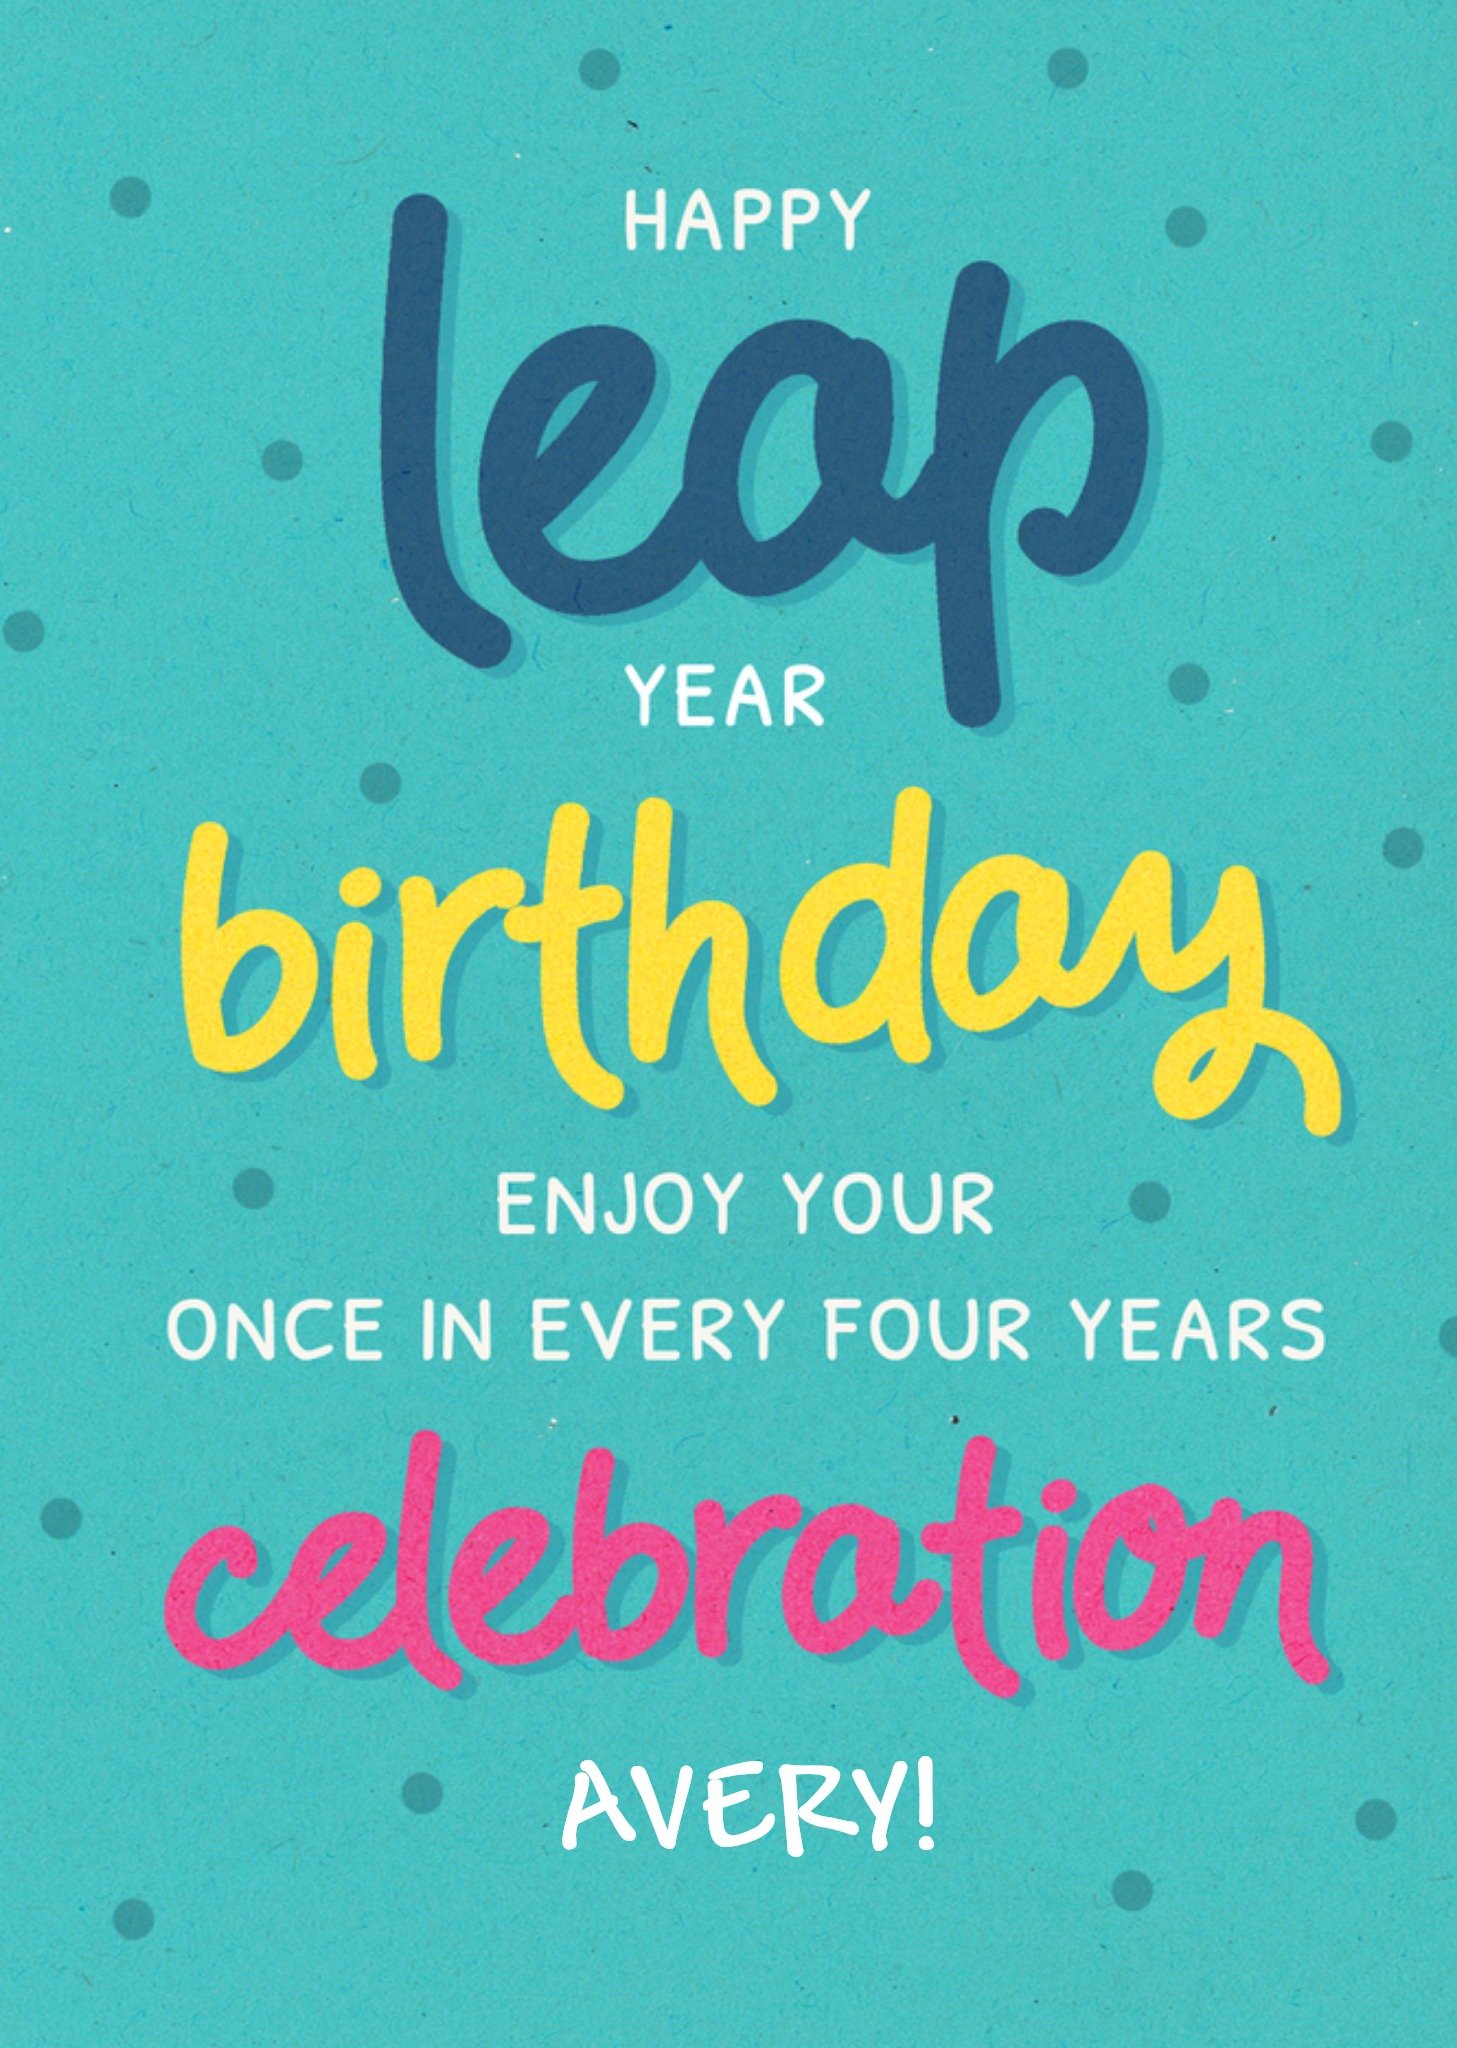 Moonpig Happy Leap Year Birthday Card, Large